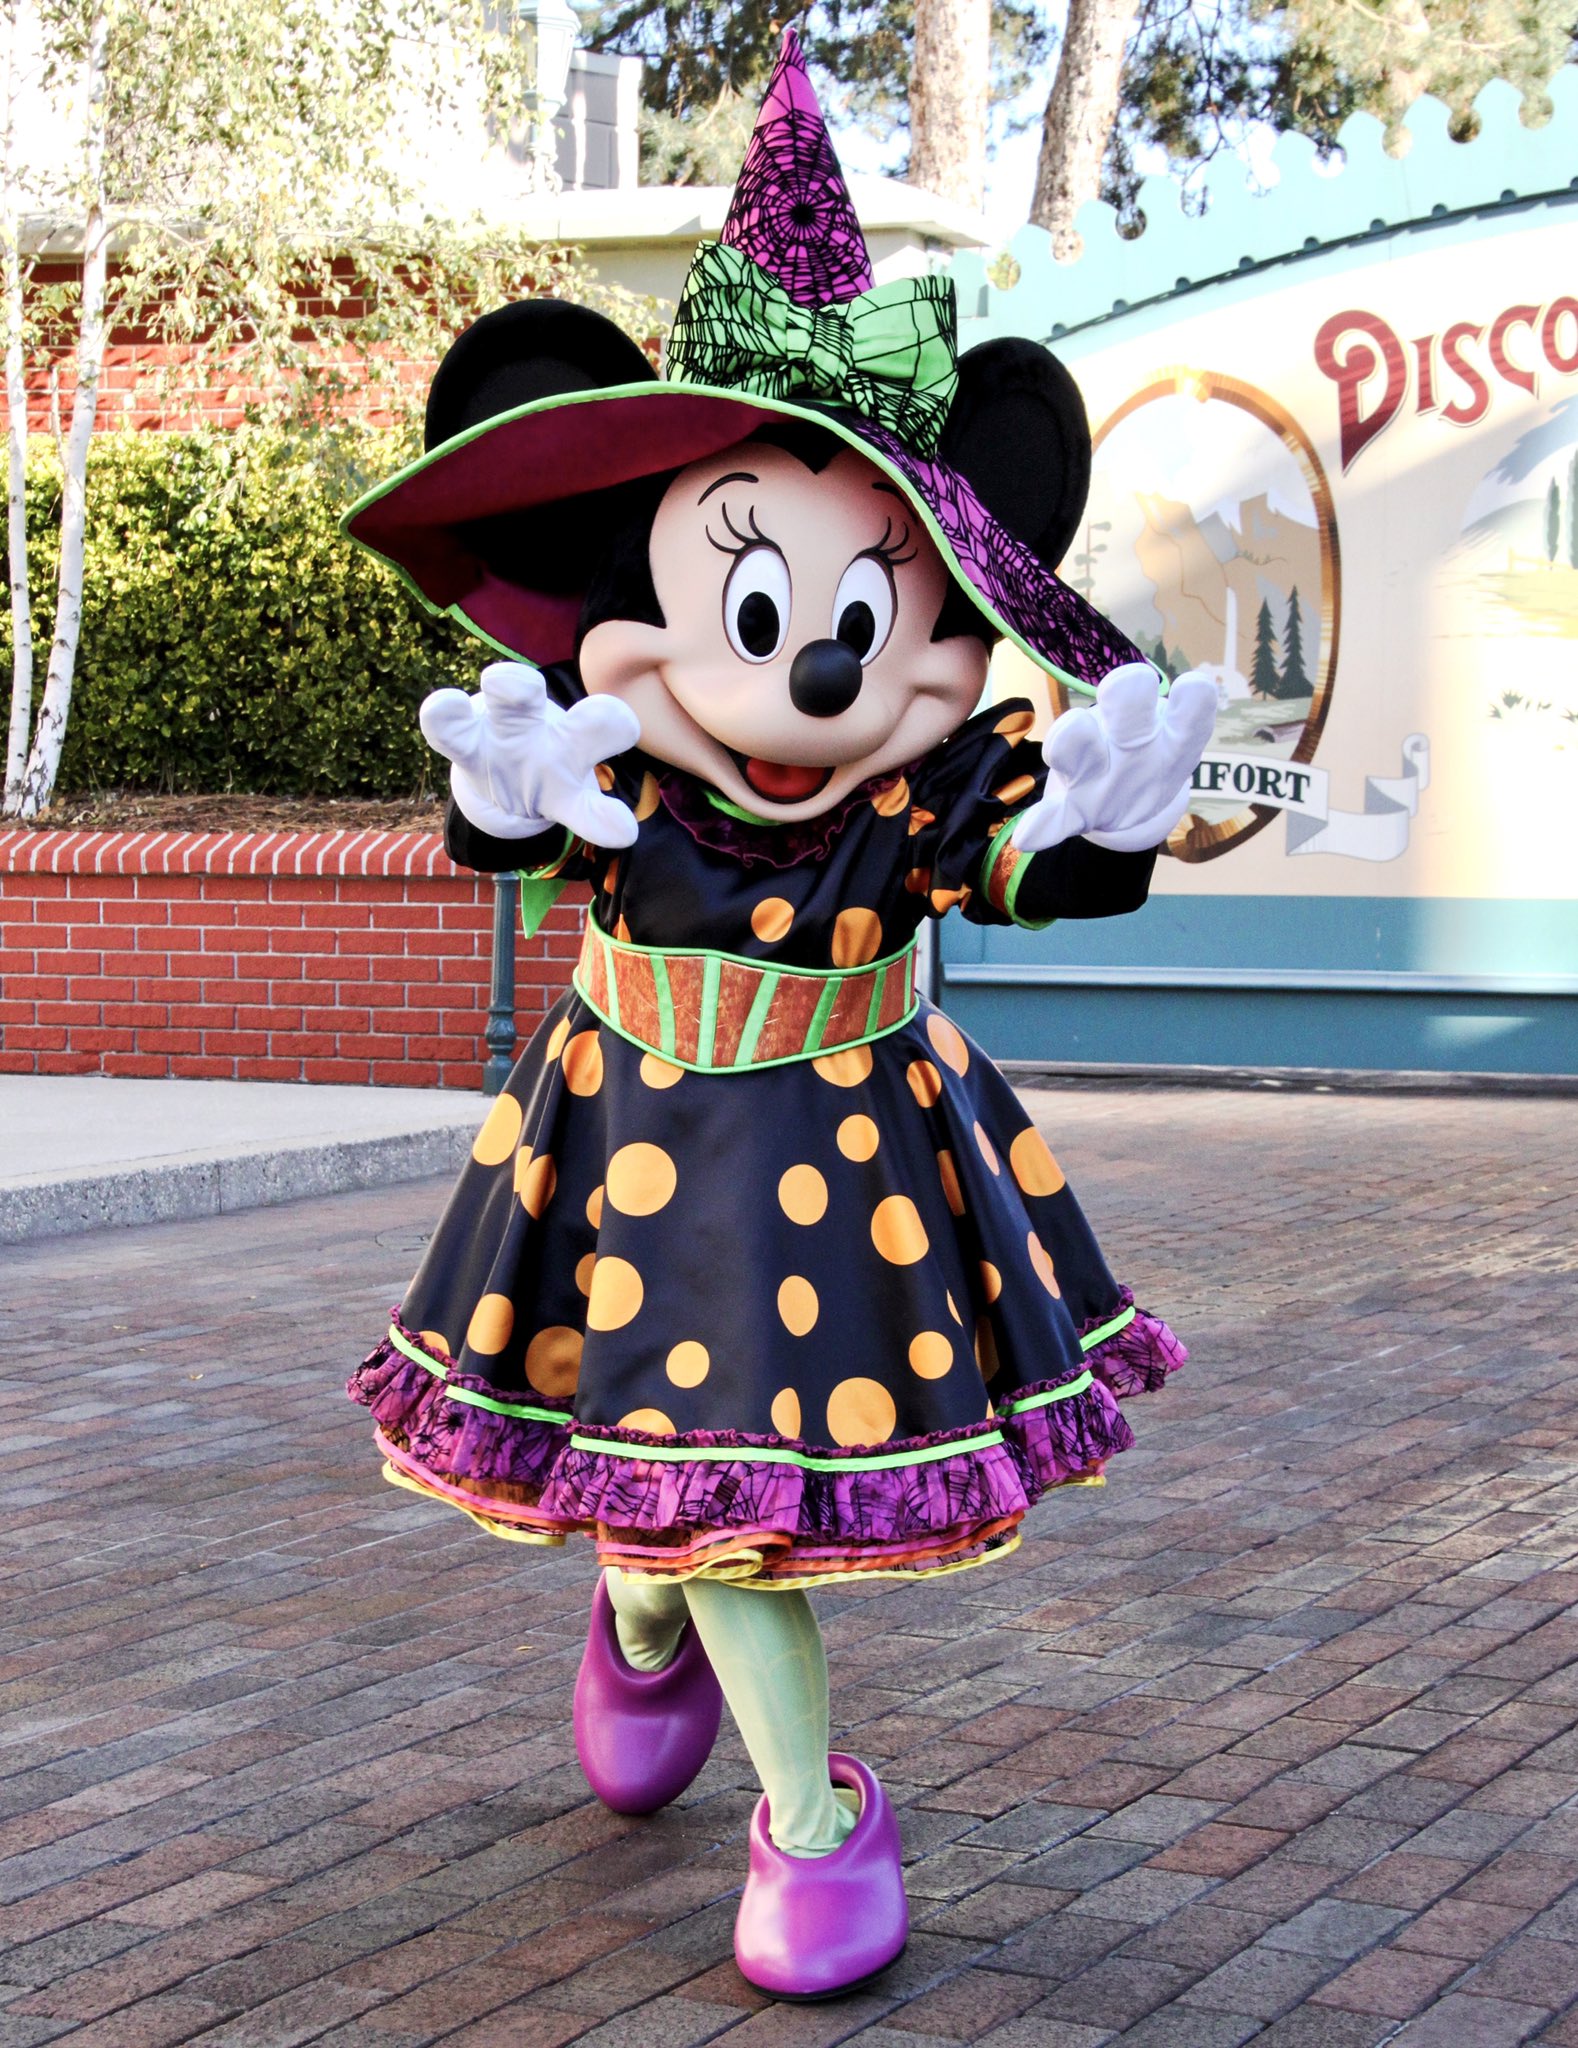 X \ CharactersPhotosBlog على X: "The cutest Halloween witch: Minnie Mouse! ✨ #minnie #minniemouse #witch #halloweenwitch #halloween #DisneyHalloween #harvesttime #disneylandparis #disneycharacters #disneyparks #disneyfriends https://t.co/G3ArVH20IP"